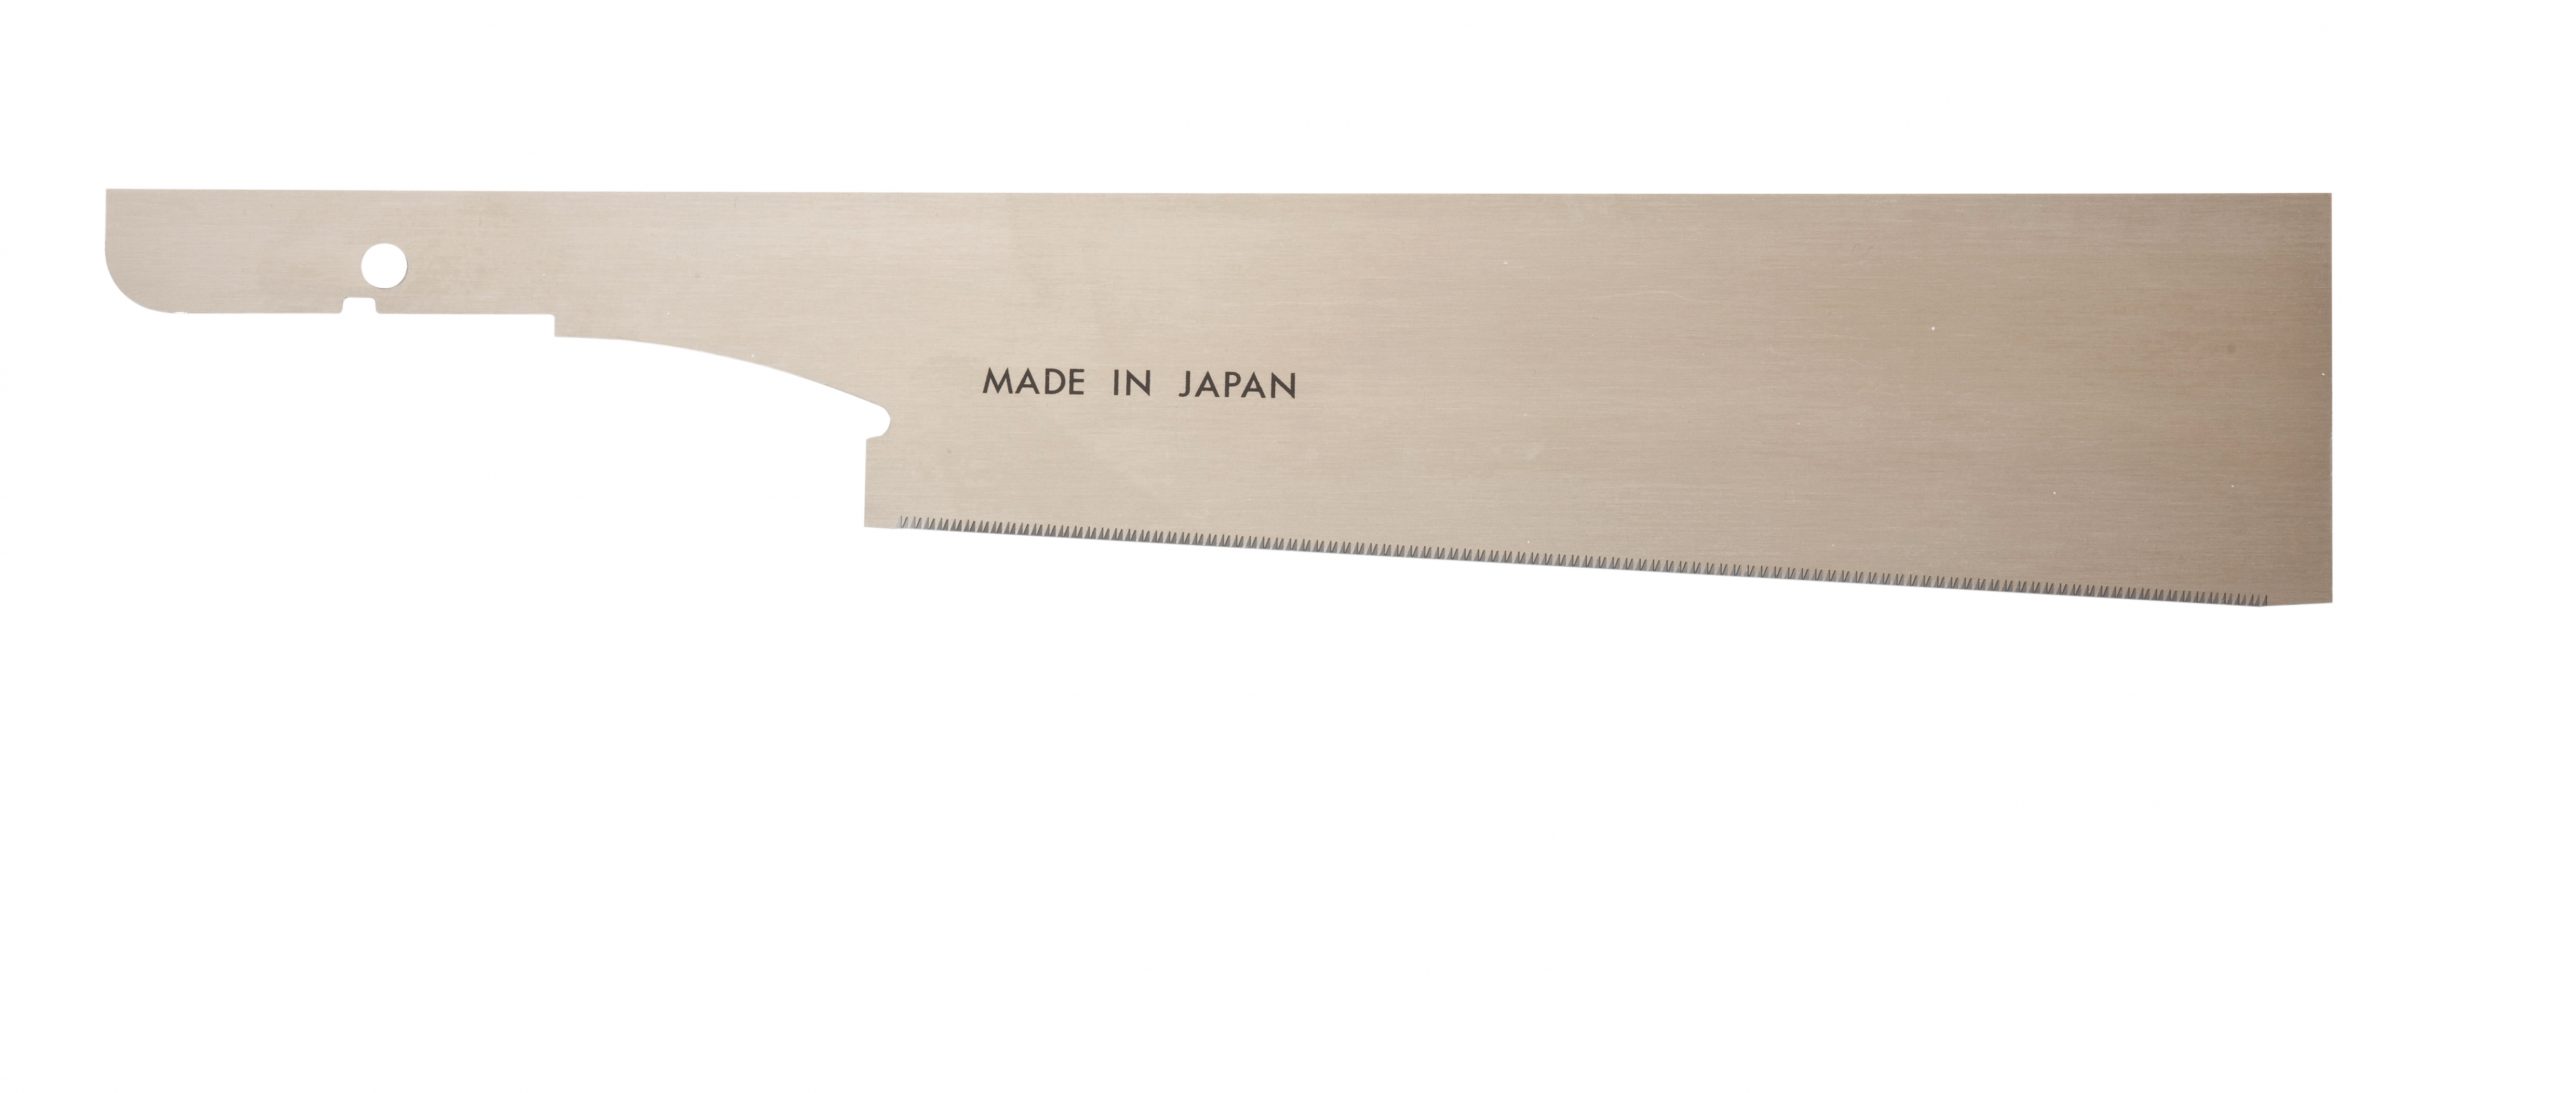 NEW Genuine Hishika Dozuki Replacement Saw Blade 150mm Rip Cut 